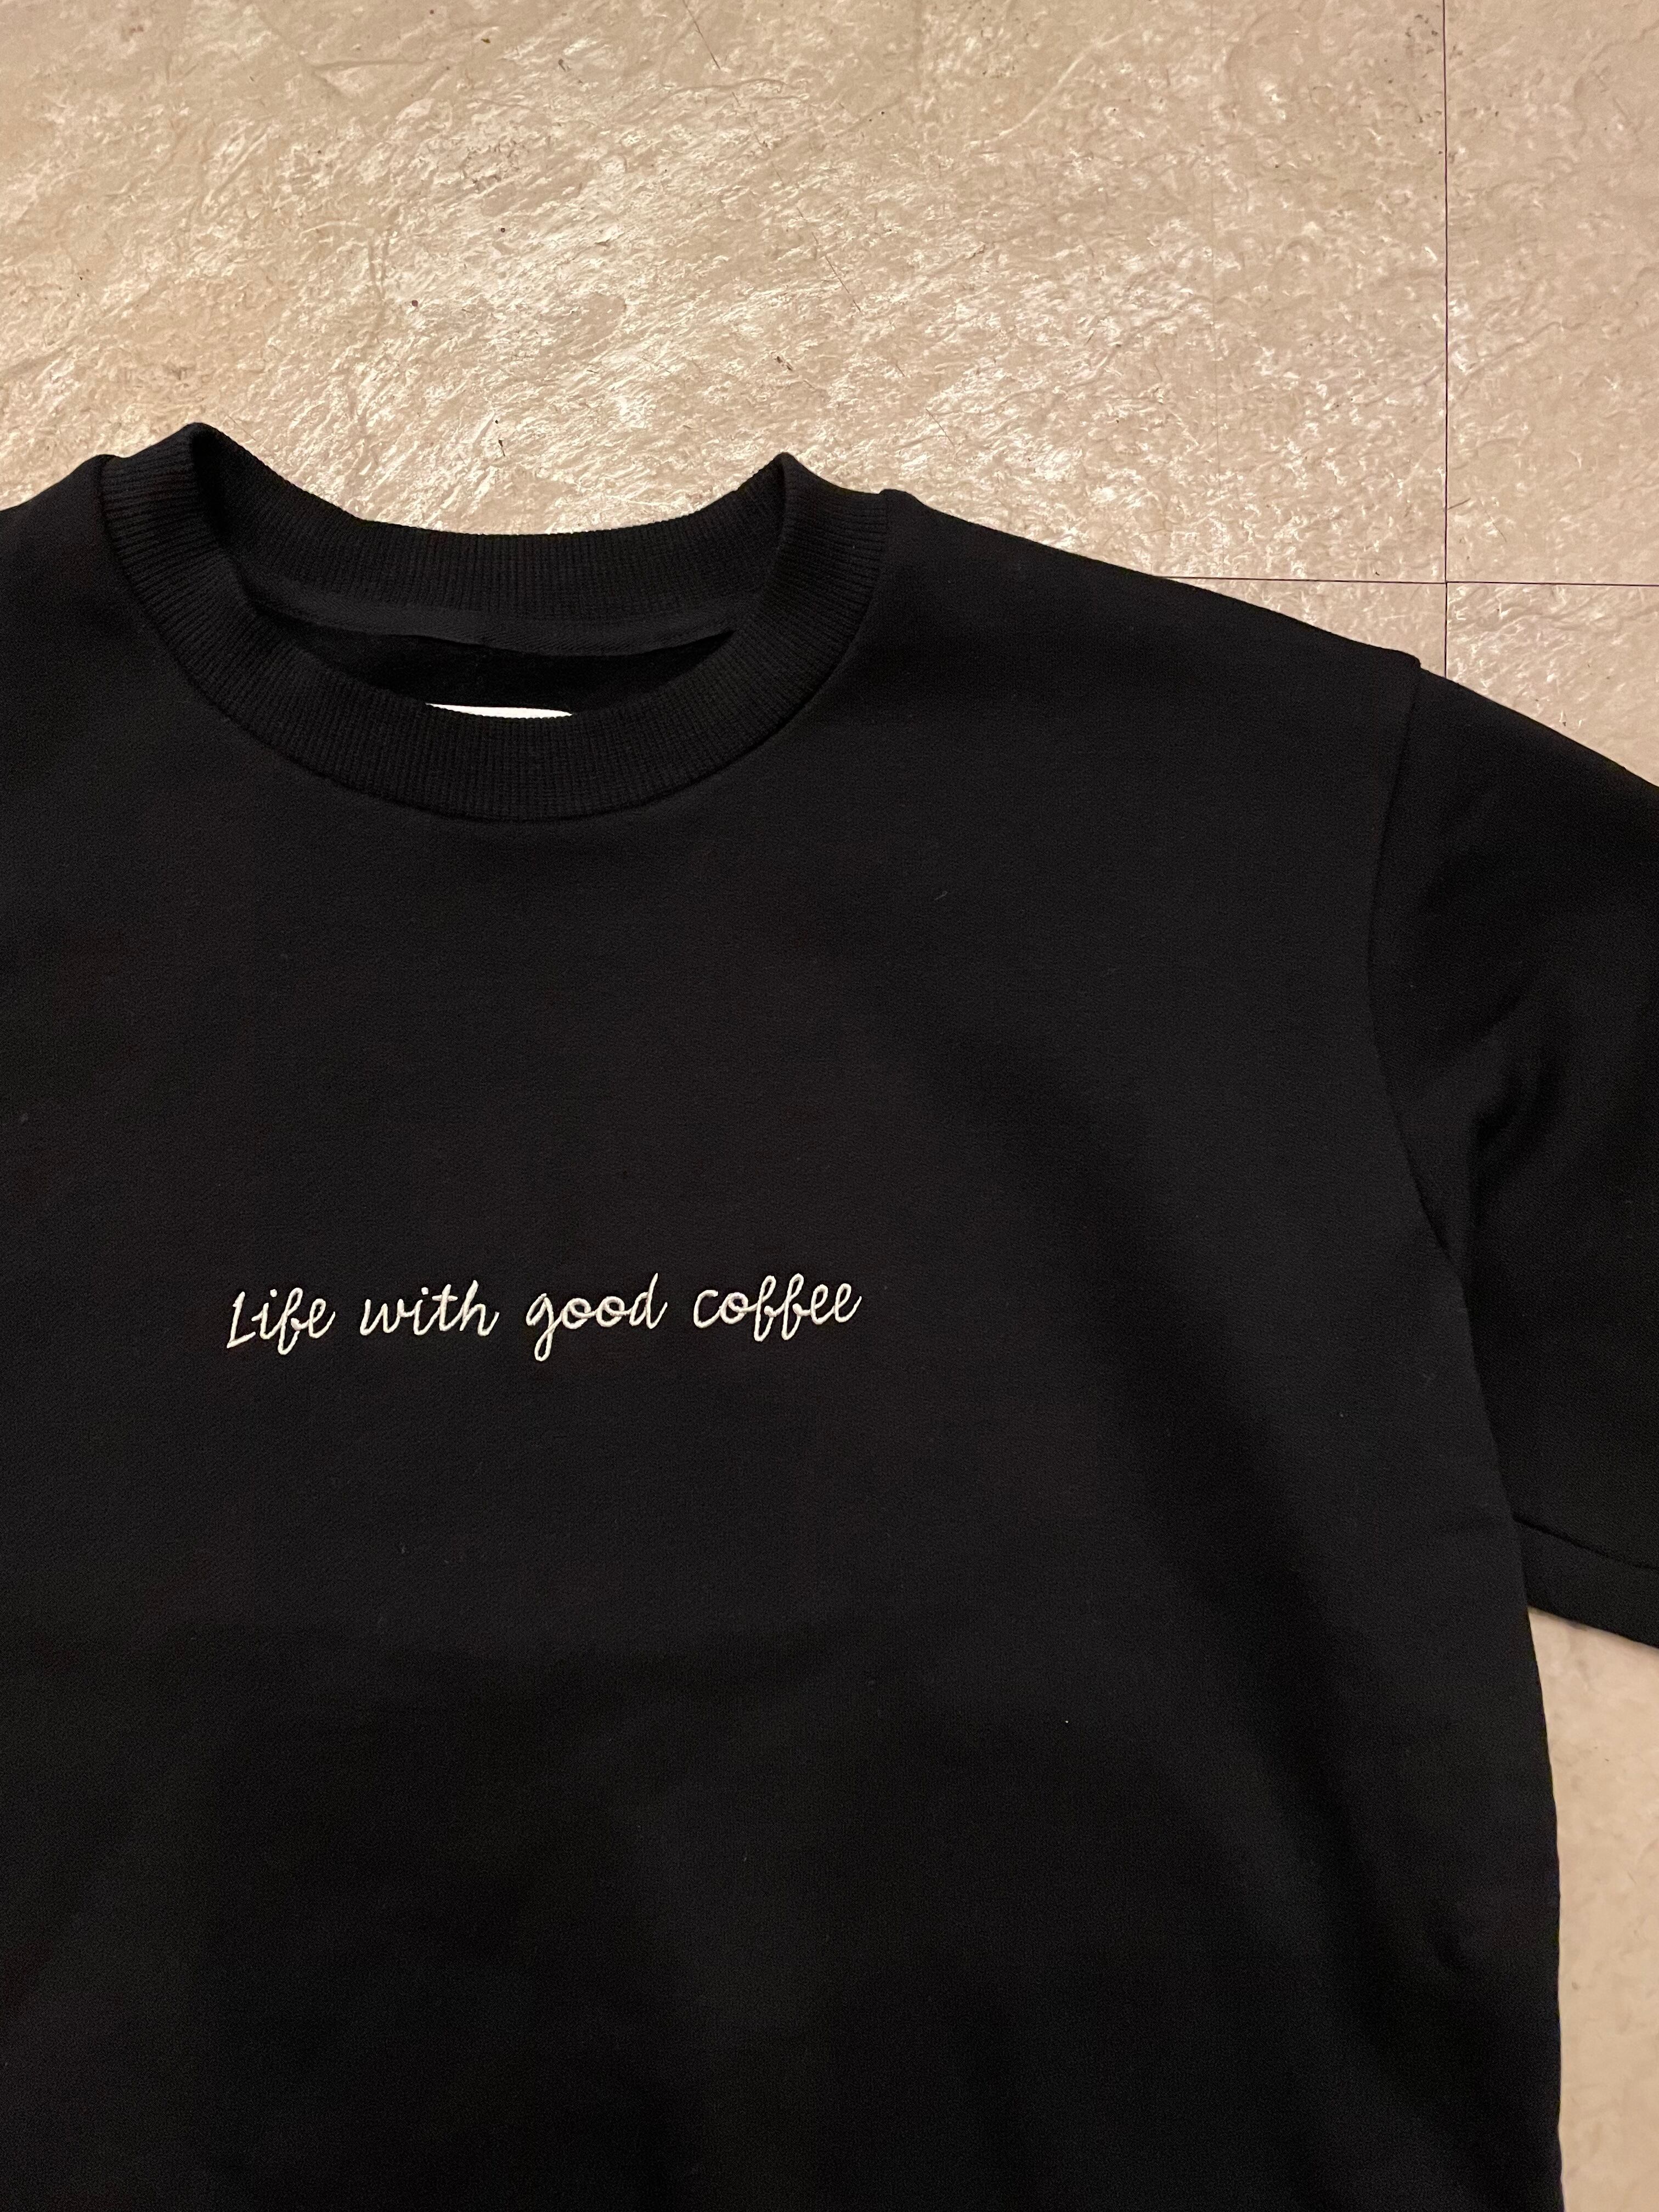 NO COFFEE Tシャツ黒M kyne ノーコーヒー